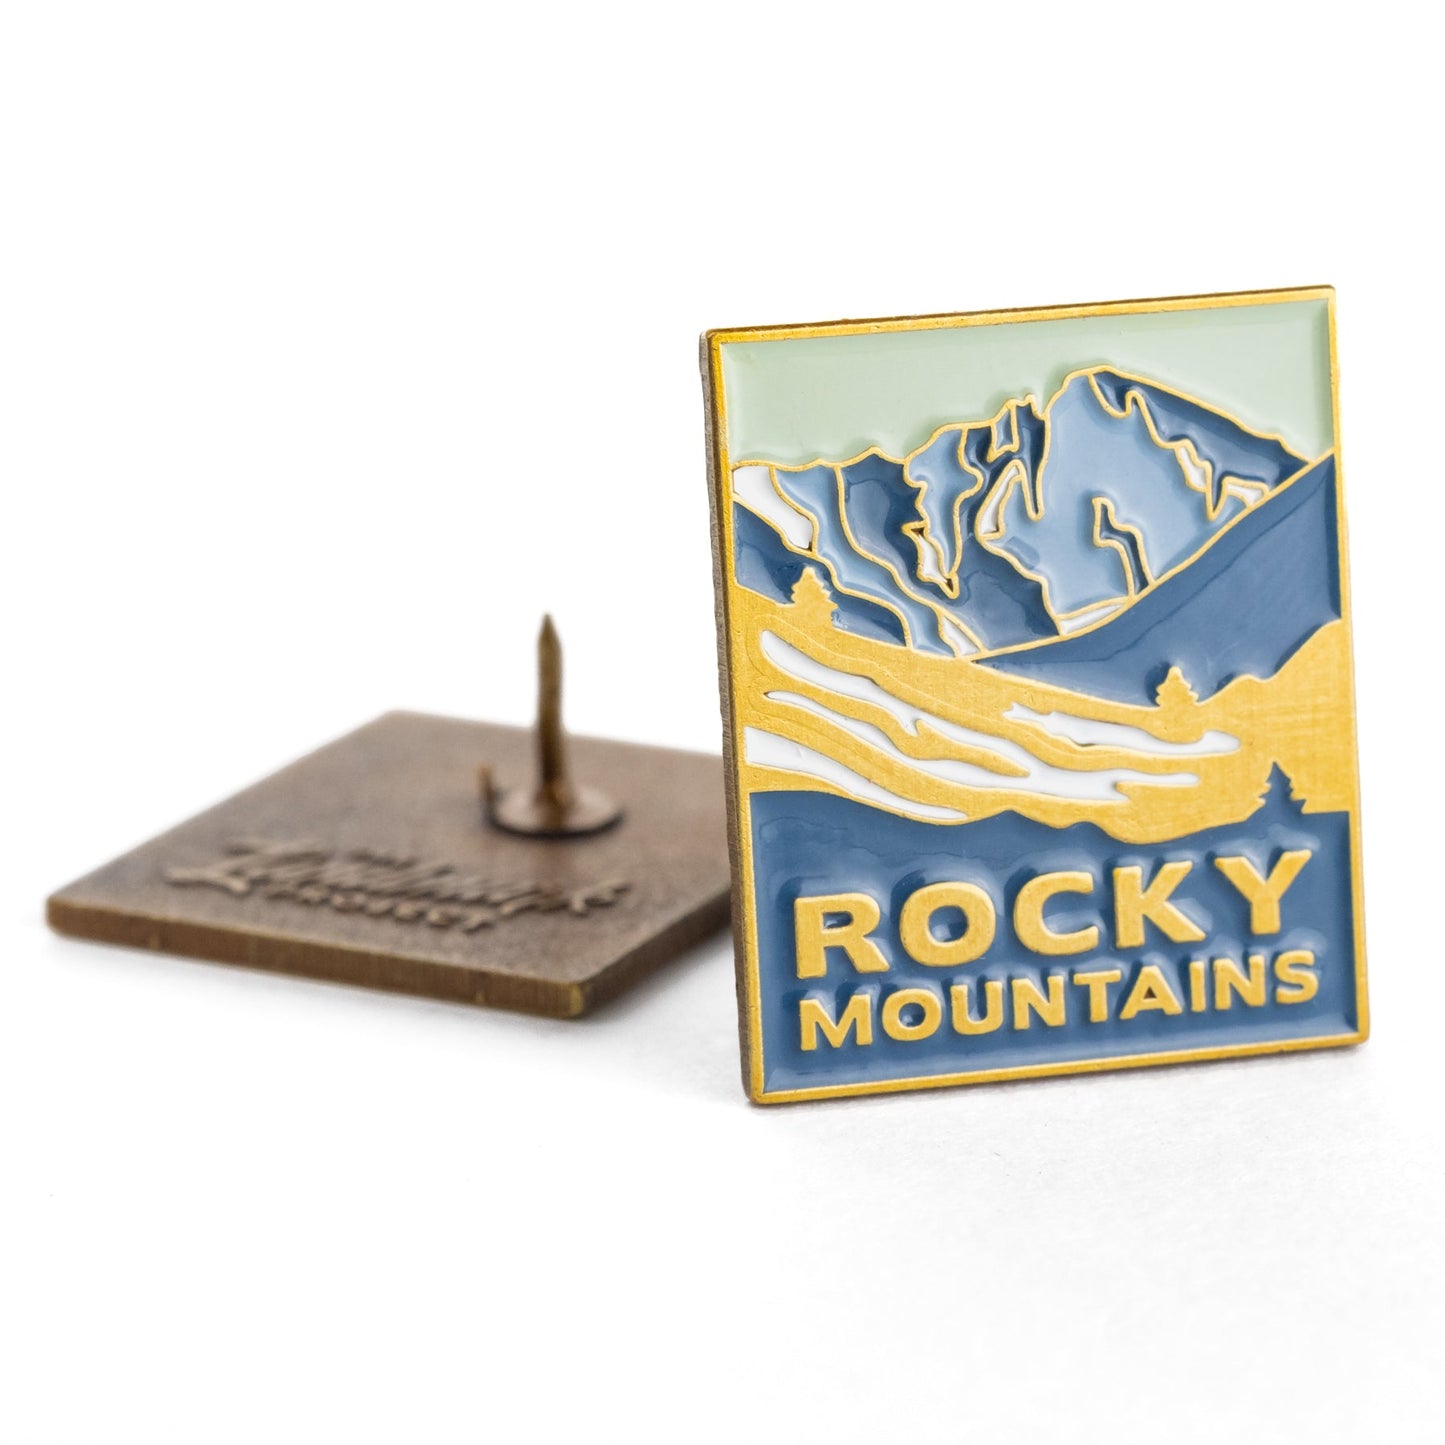 Rocky Mountains National Park Enamel Pin